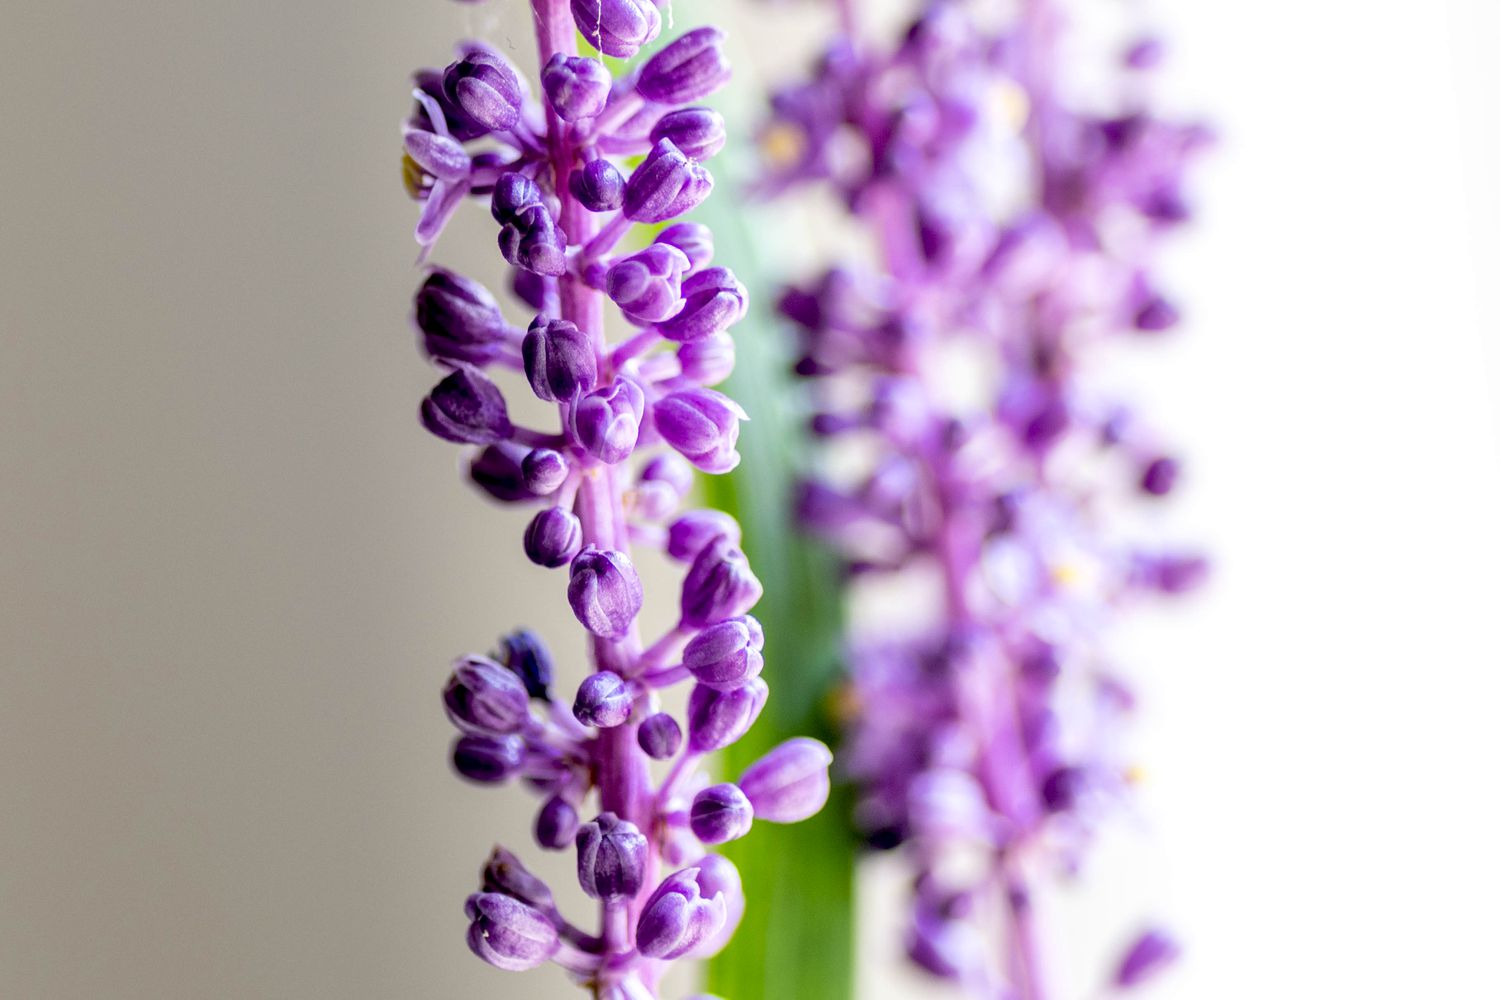 Lilytruf-Blütenstachel mit winzigen Lavendelknospen in Nahaufnahme